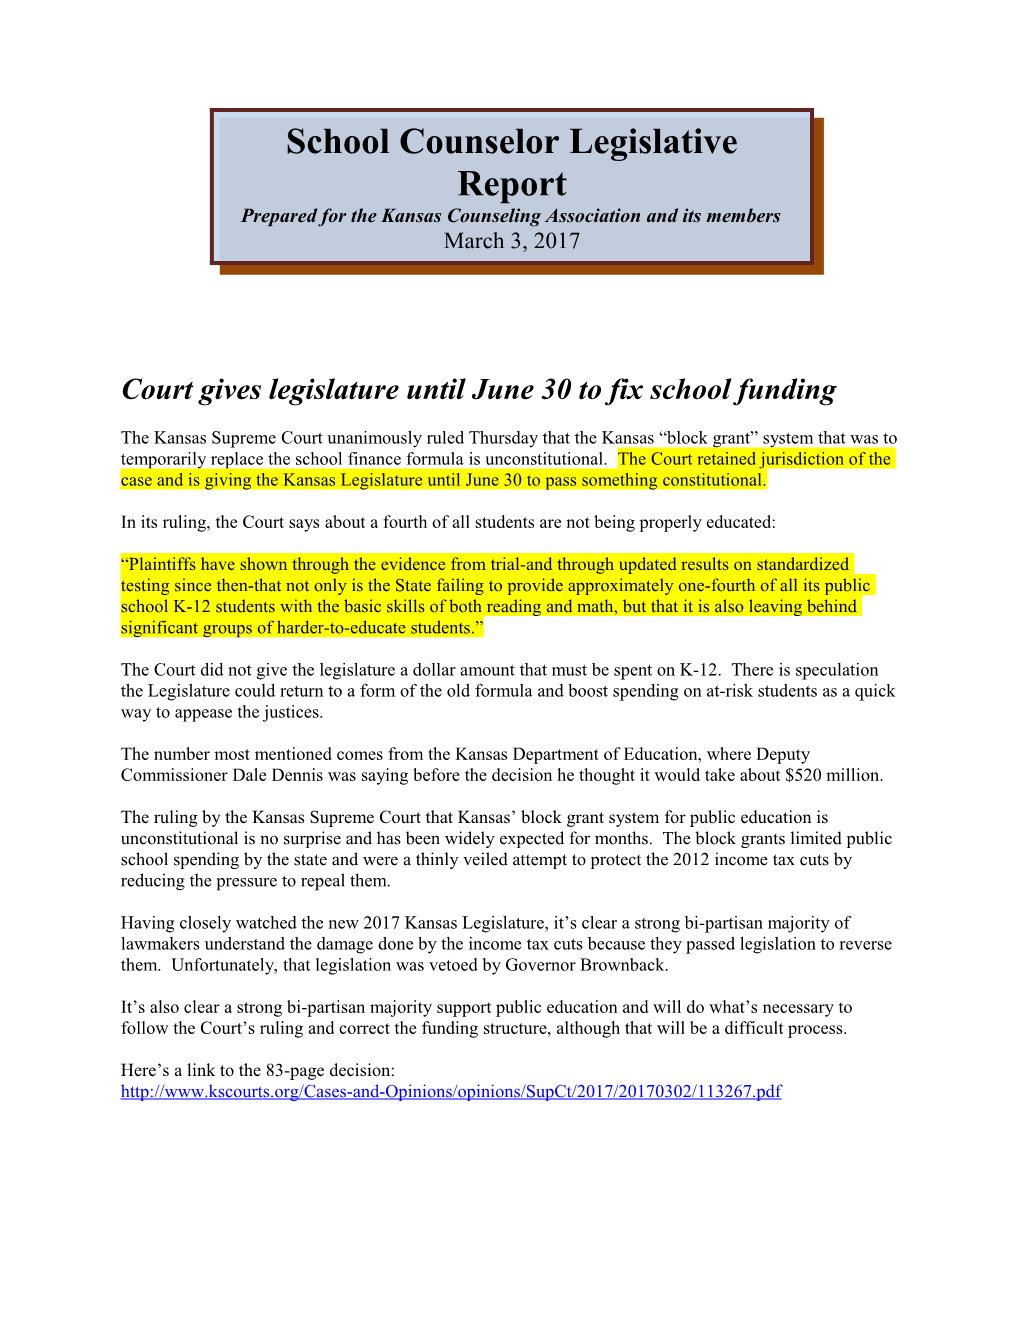 Court Gives Legislature Until June 30 to Fix School Funding